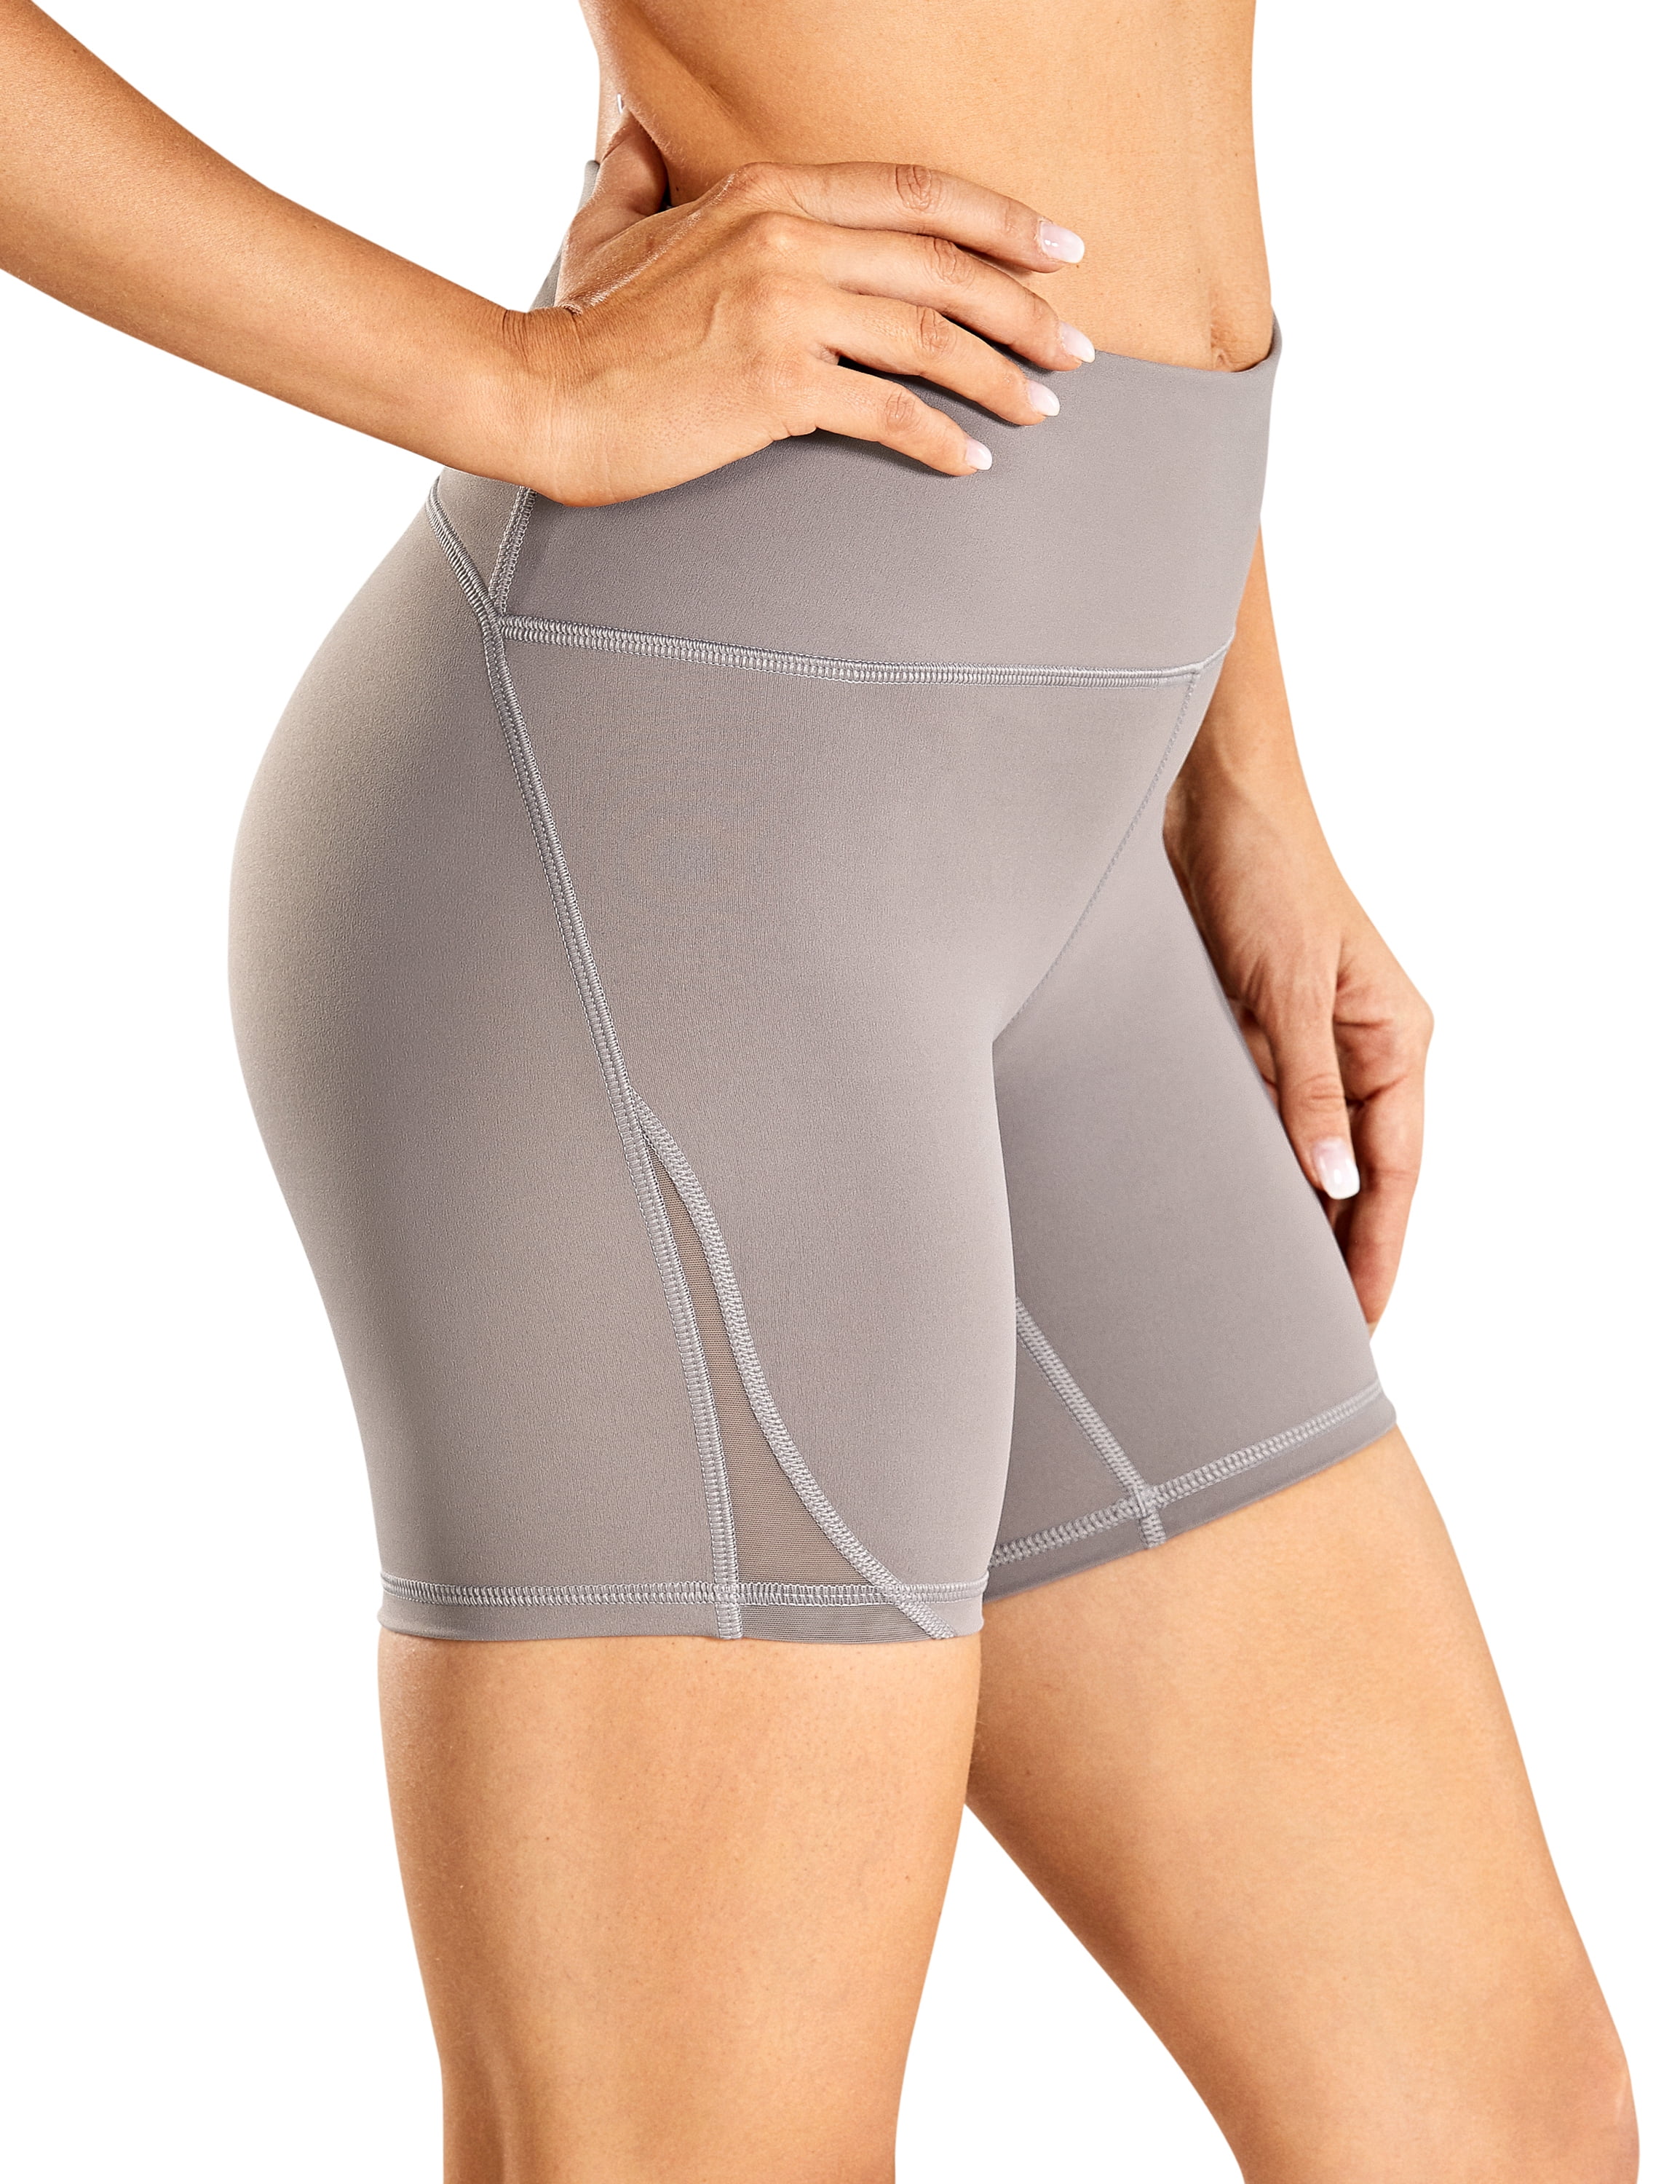 CRZ YOGA Women's Naked Feeling High Waisted Biker Shorts Tummy Control Sports Workout Yoga Shorts 6 Inches 